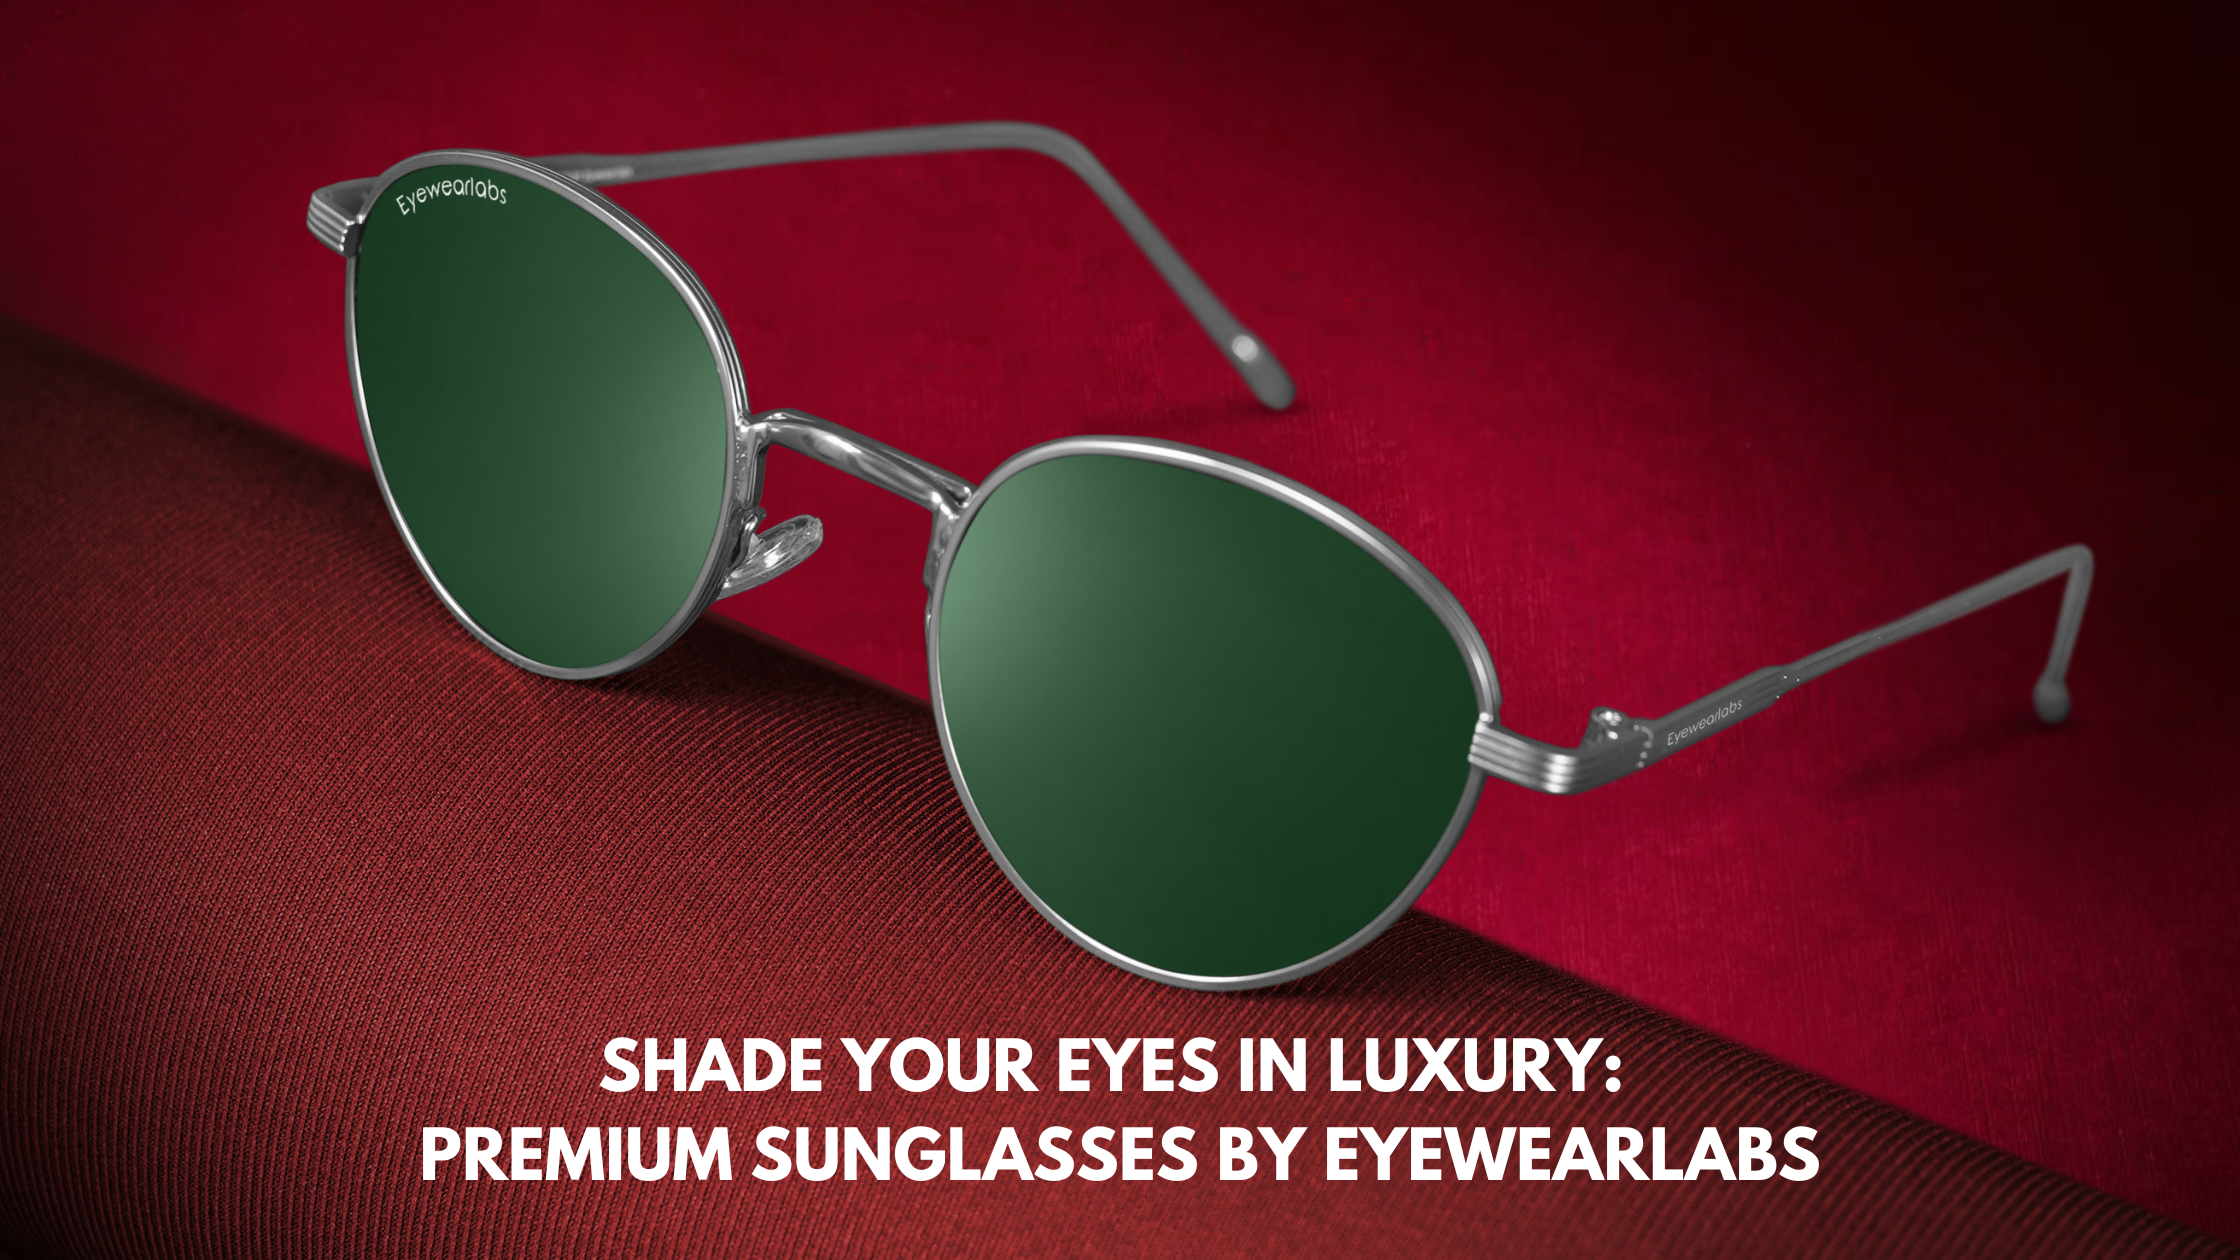 Shade Your Eyes in Luxury: Premium Sunglasses by Eyewearlabs